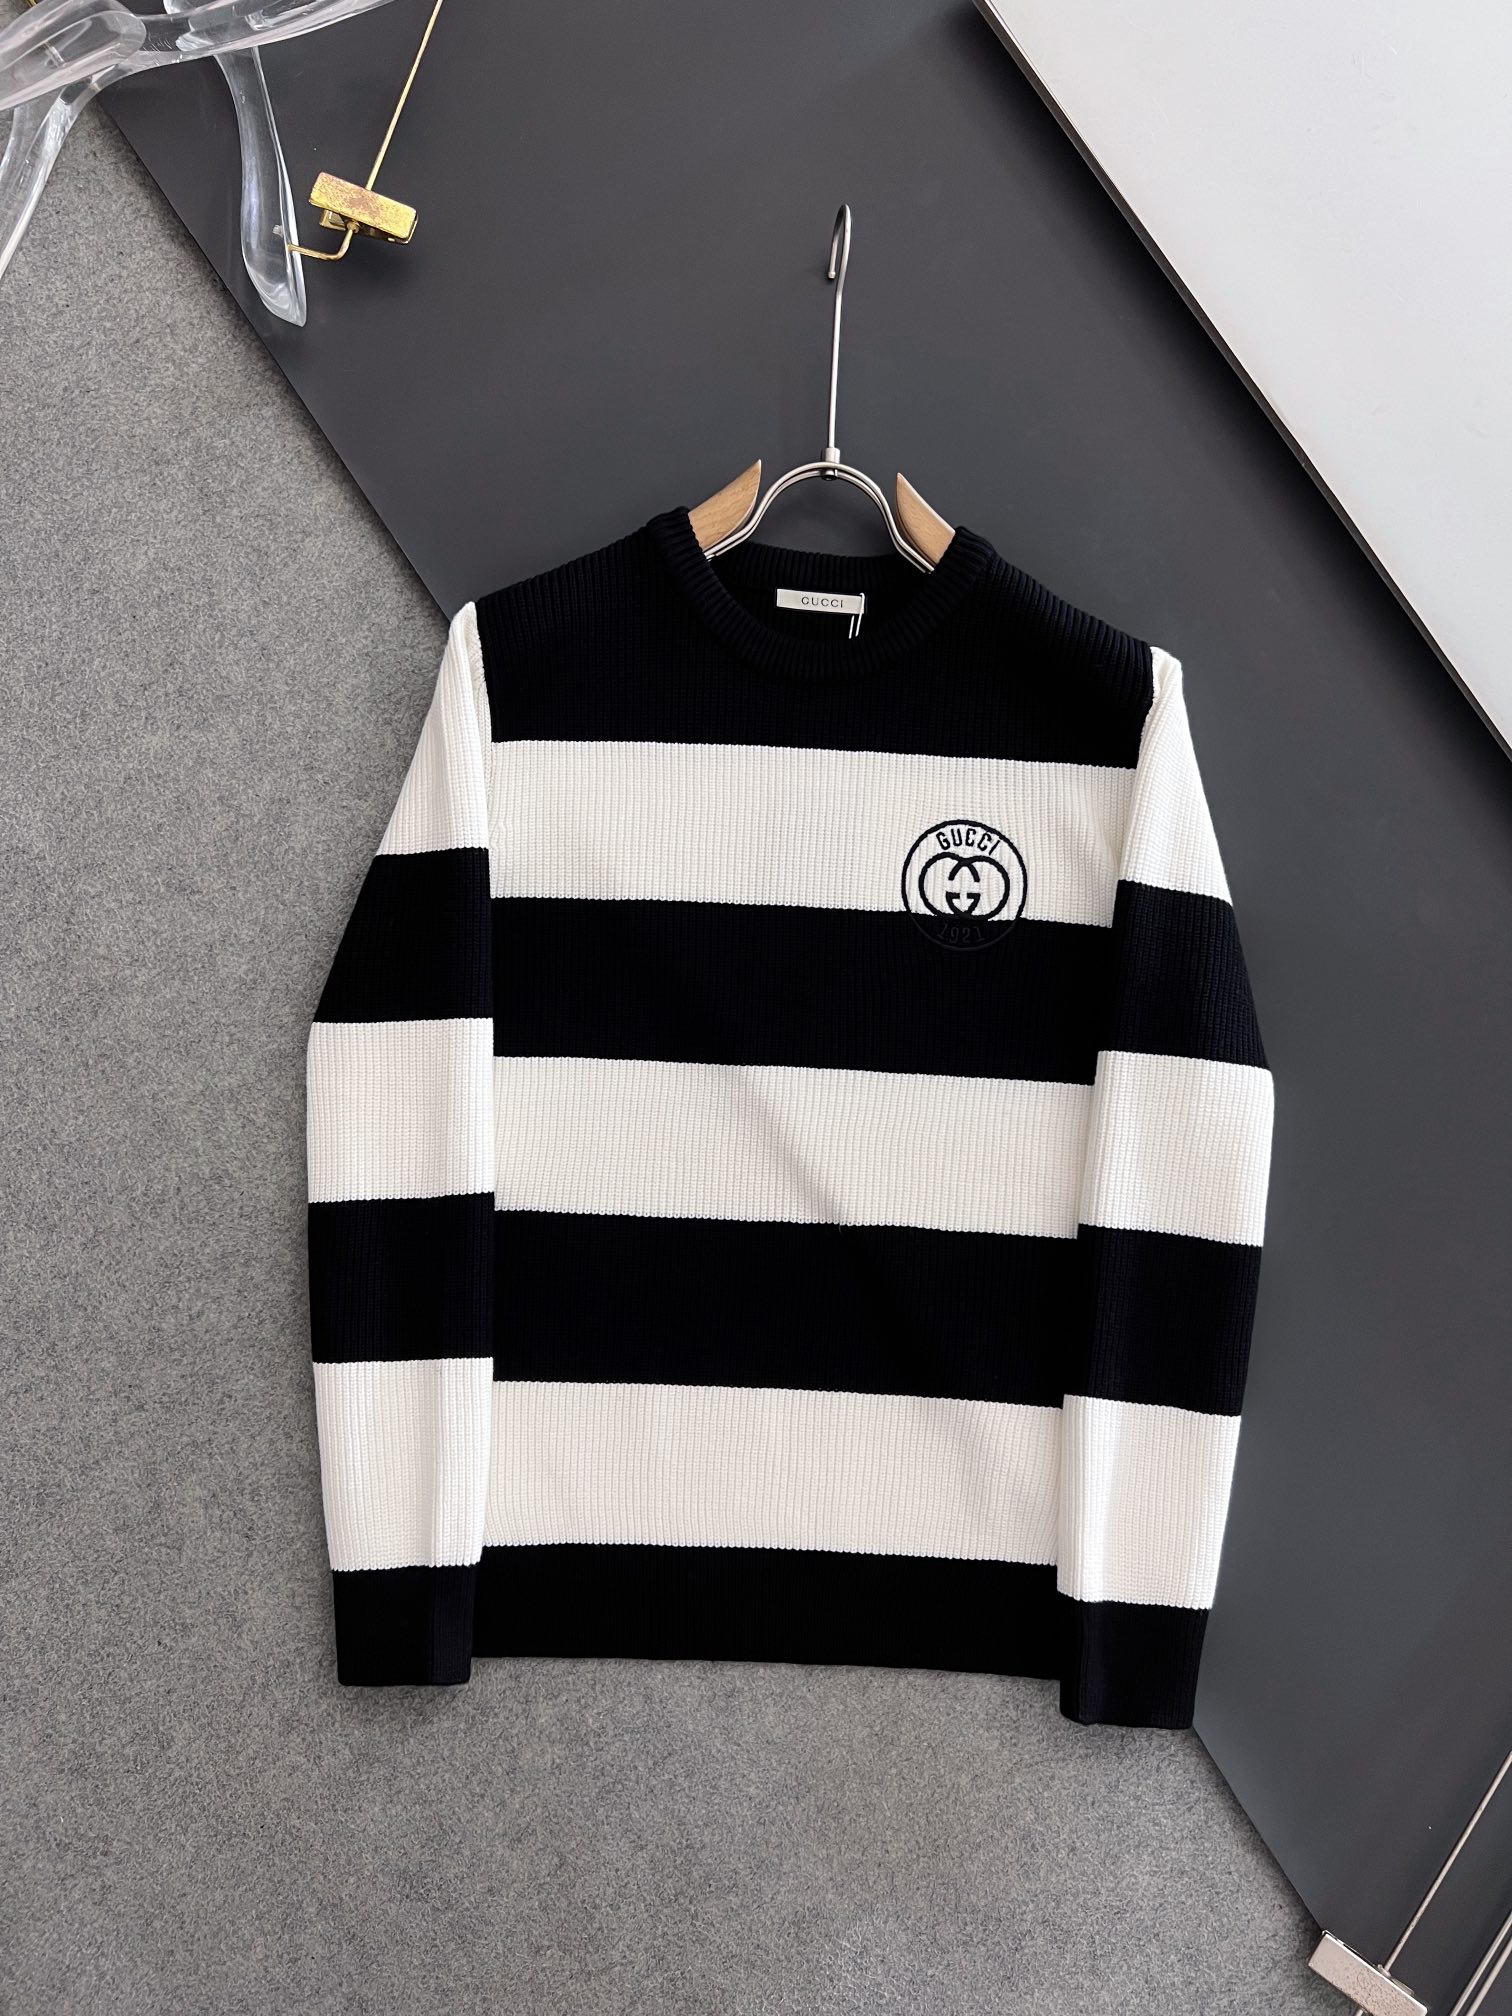 Gucci Clothing Sweatshirts Black Knitting Wool Fall/Winter Collection Fashion